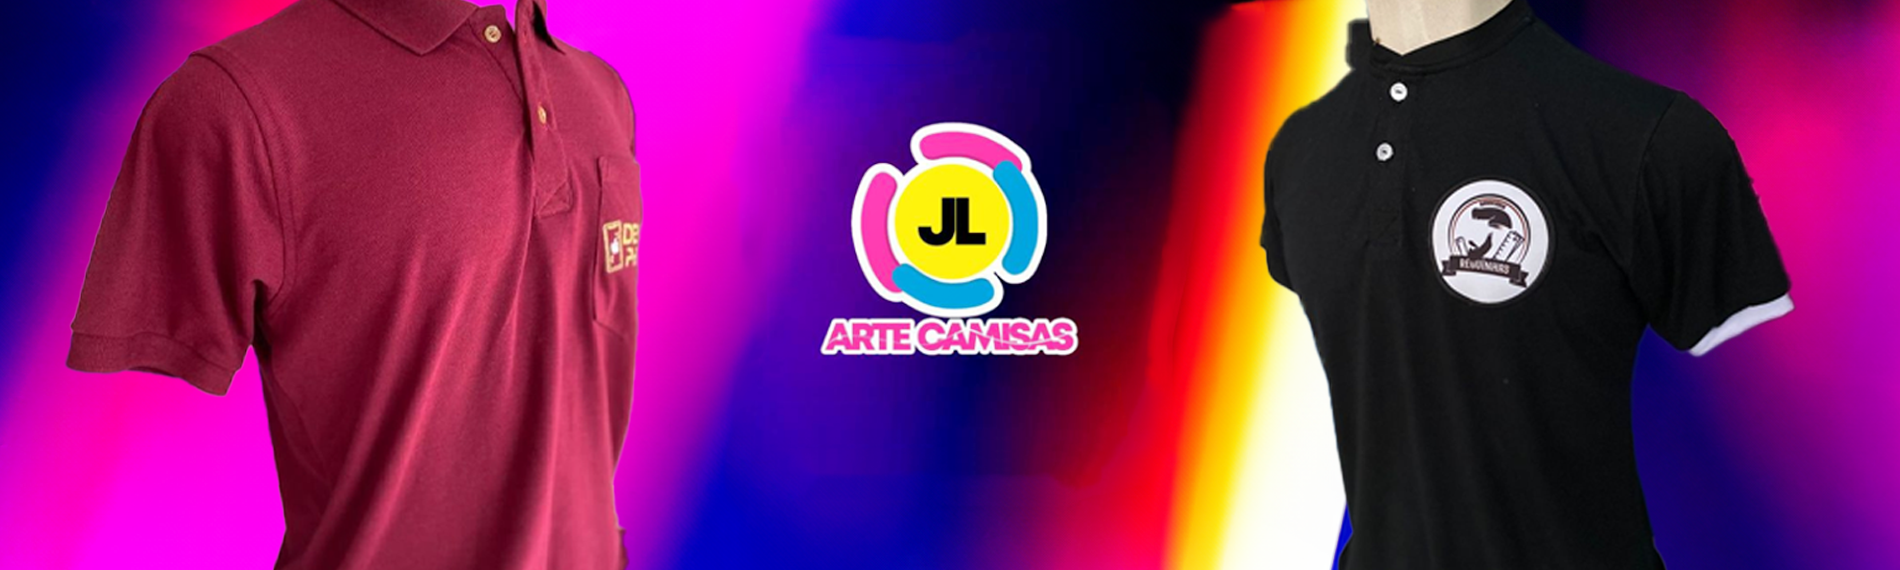 banner da empresa JL Arte Camisas Oficial